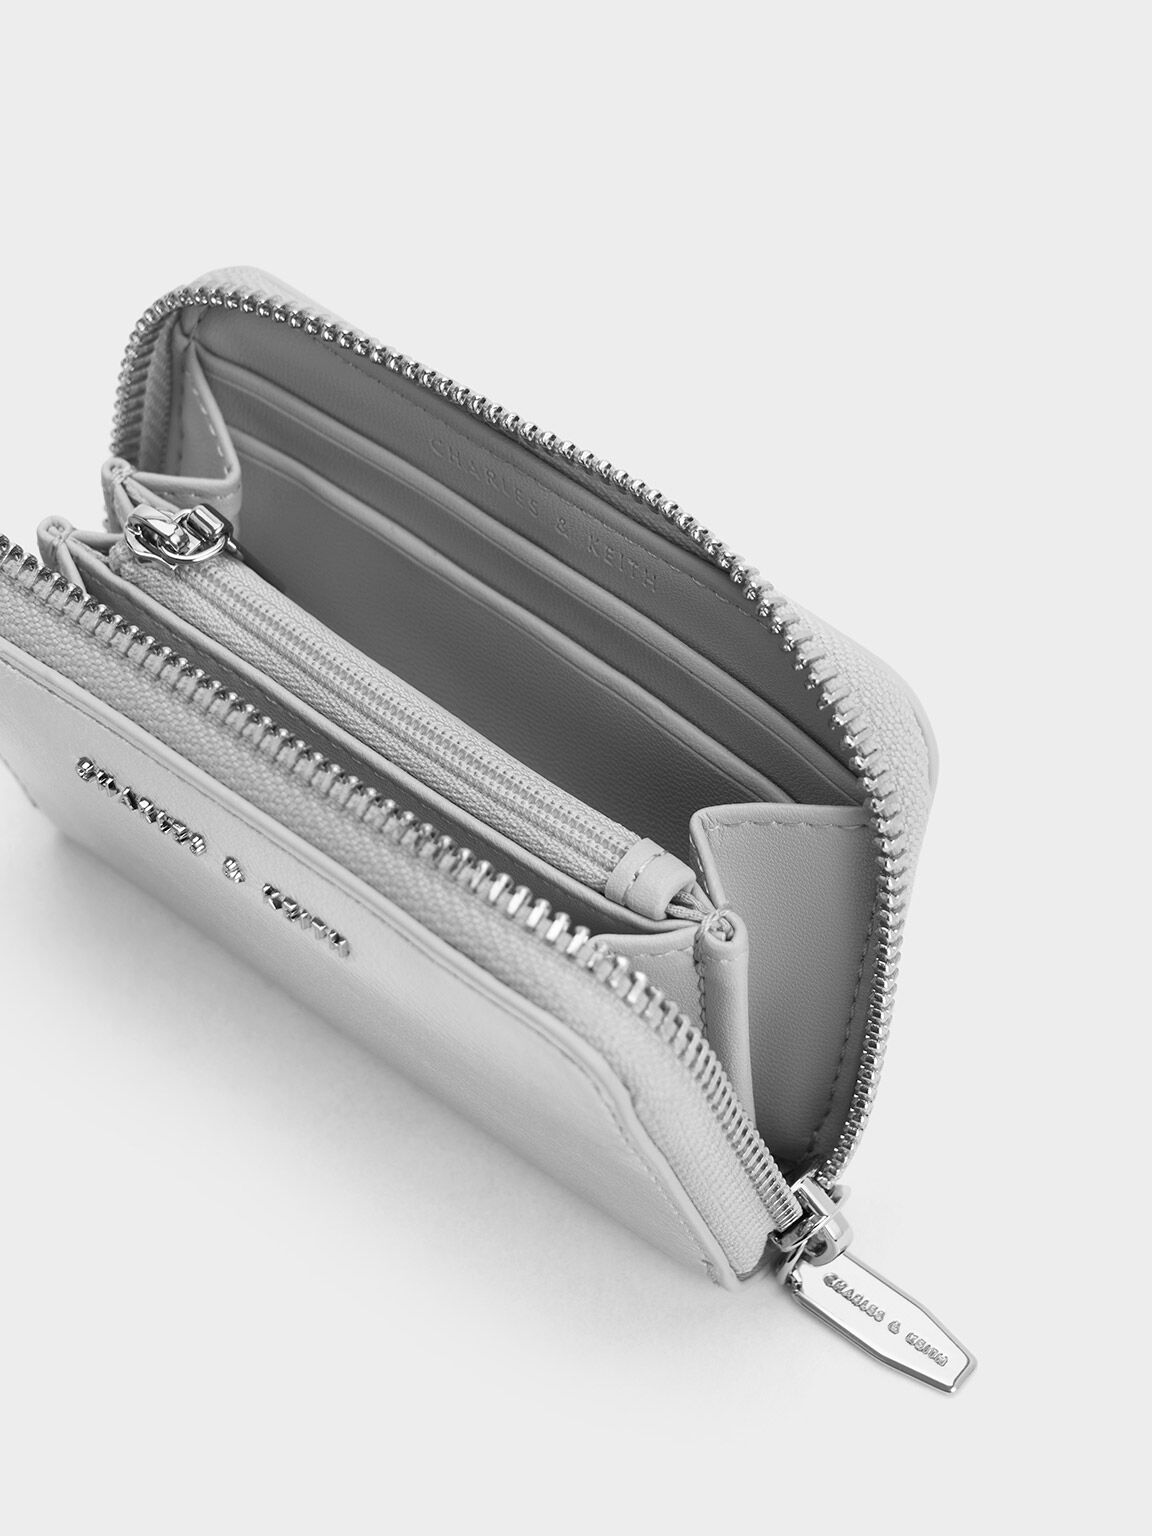 Starlet Wallet Bag in Luxe Crackled Silver - j.hoffman's